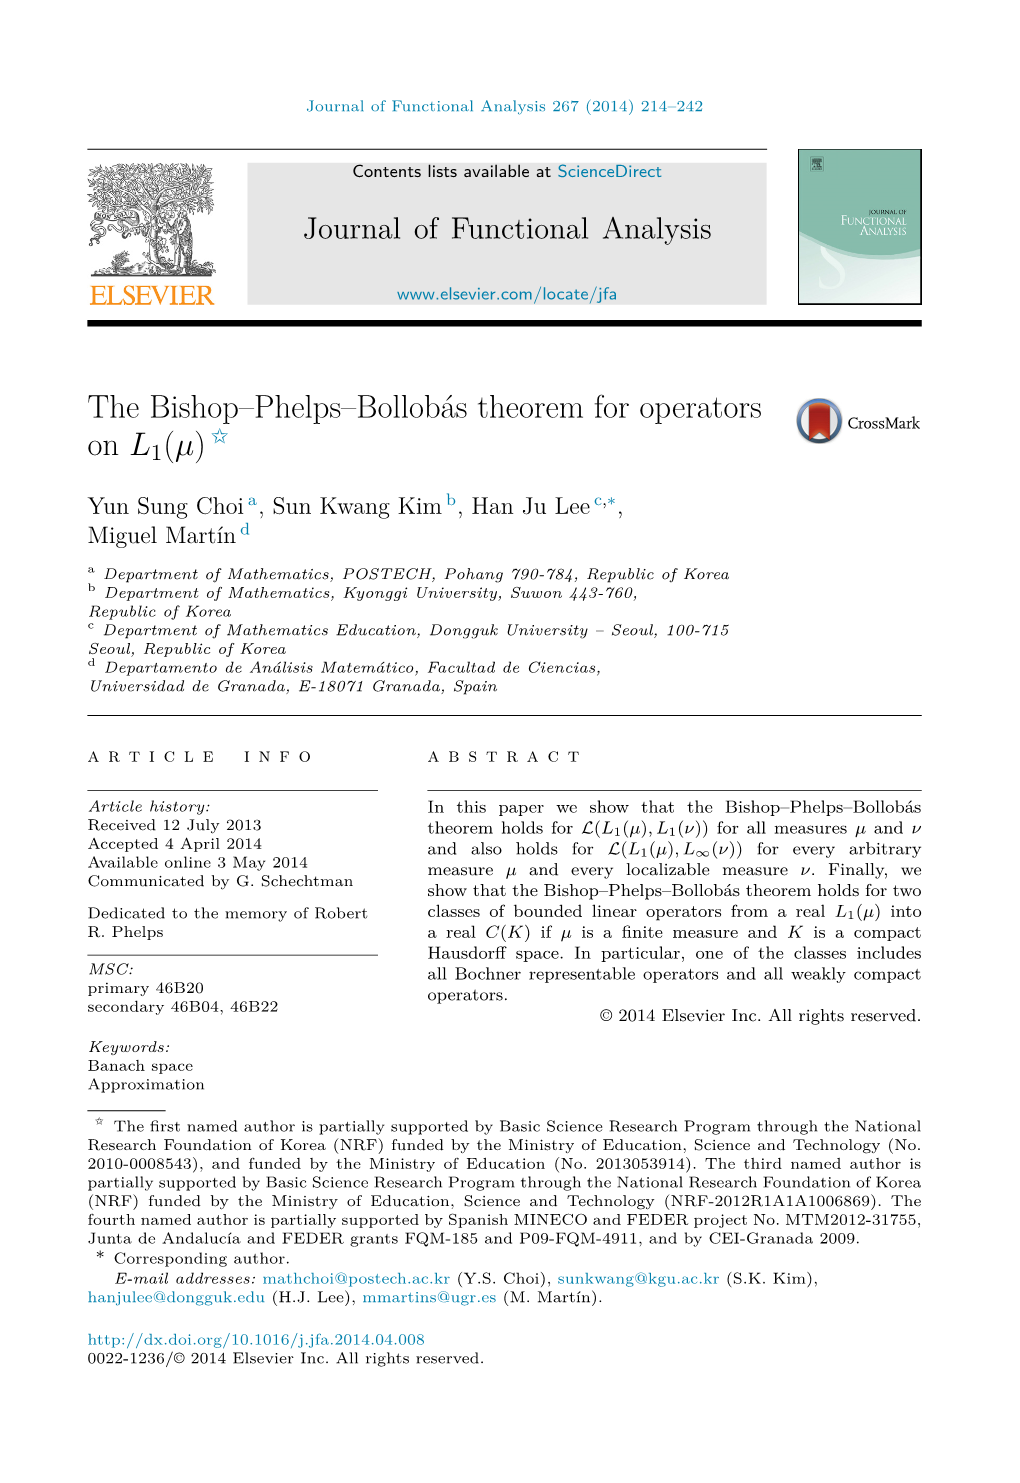 The Bishop–Phelps–Bollobás Theorem for Operators on L1(Μ)